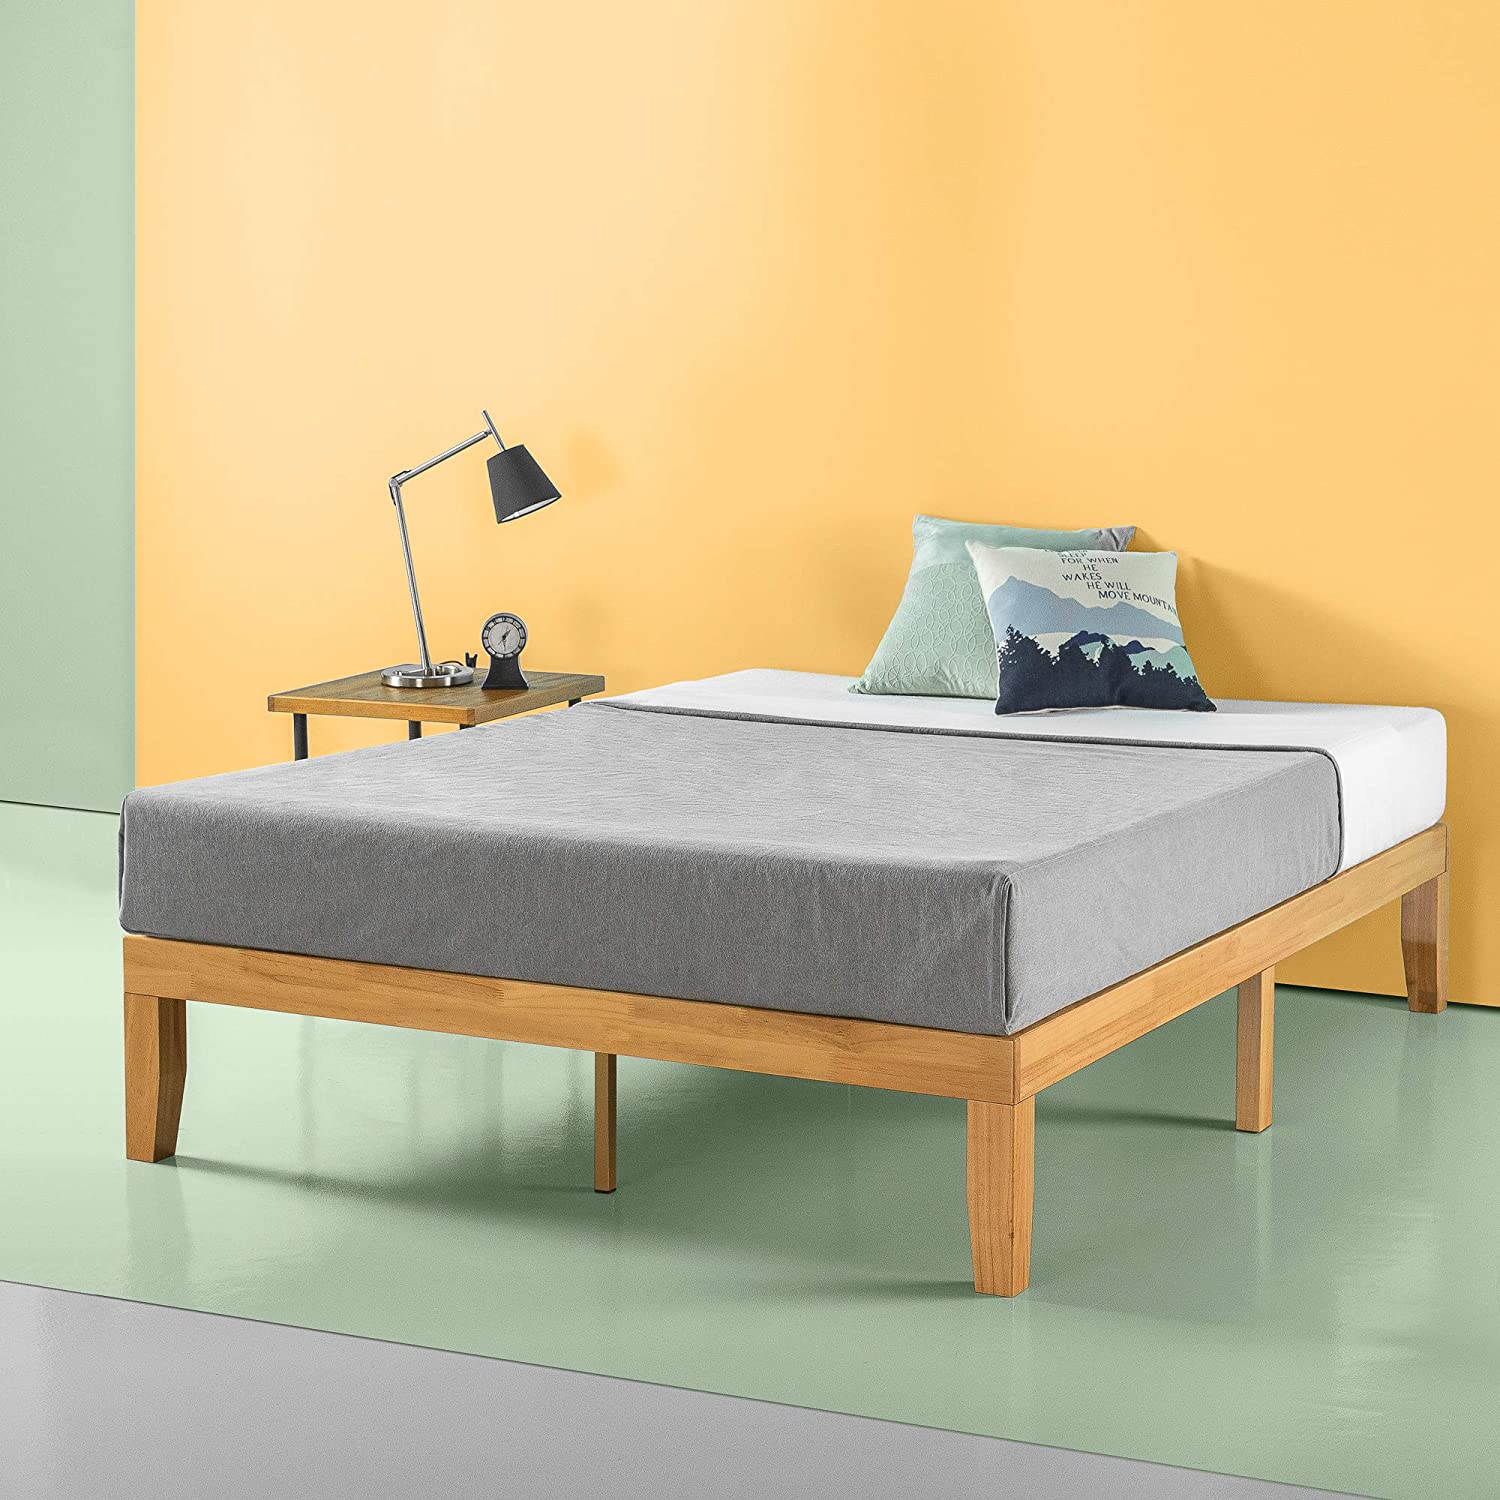 Zinus 14" Wood Platform Bed Frame in Queen (Natural) $147 + FS